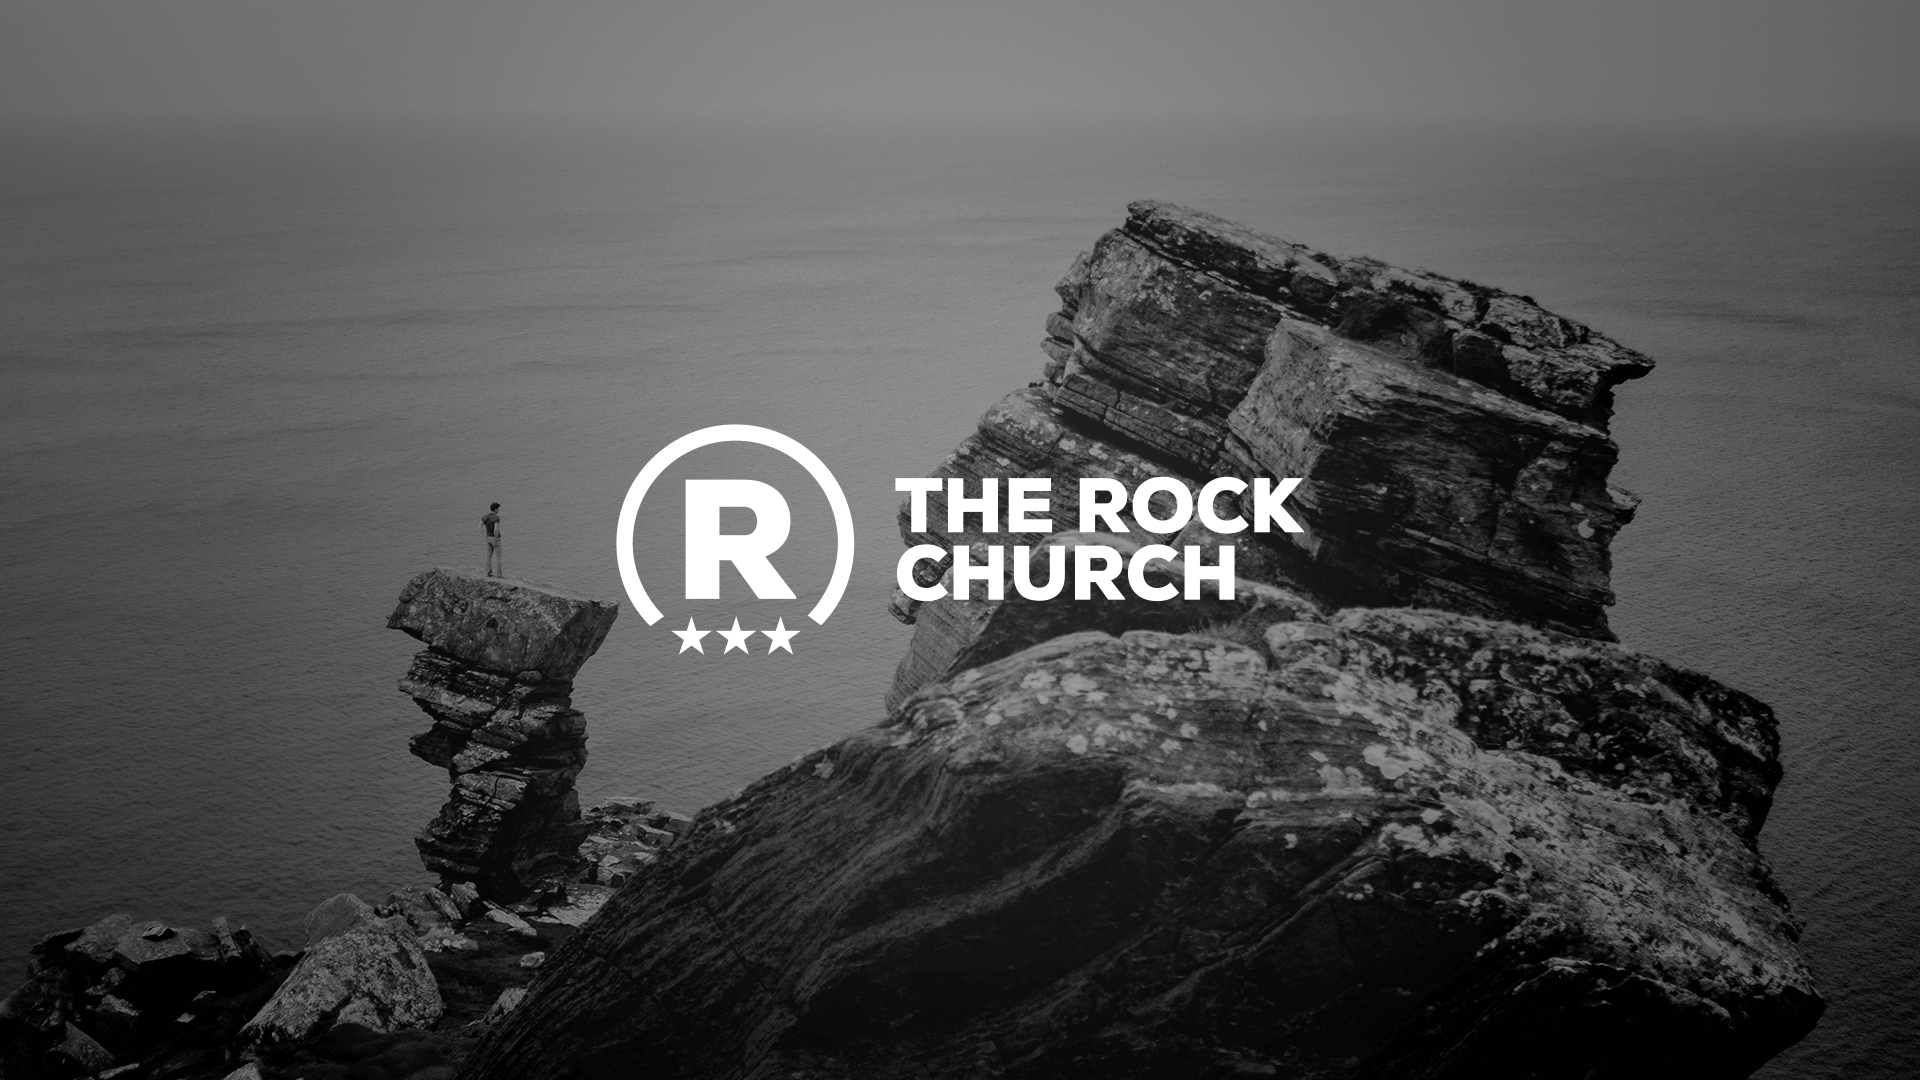 The Rock Church - Convay, Sc - Church Logo Ideas